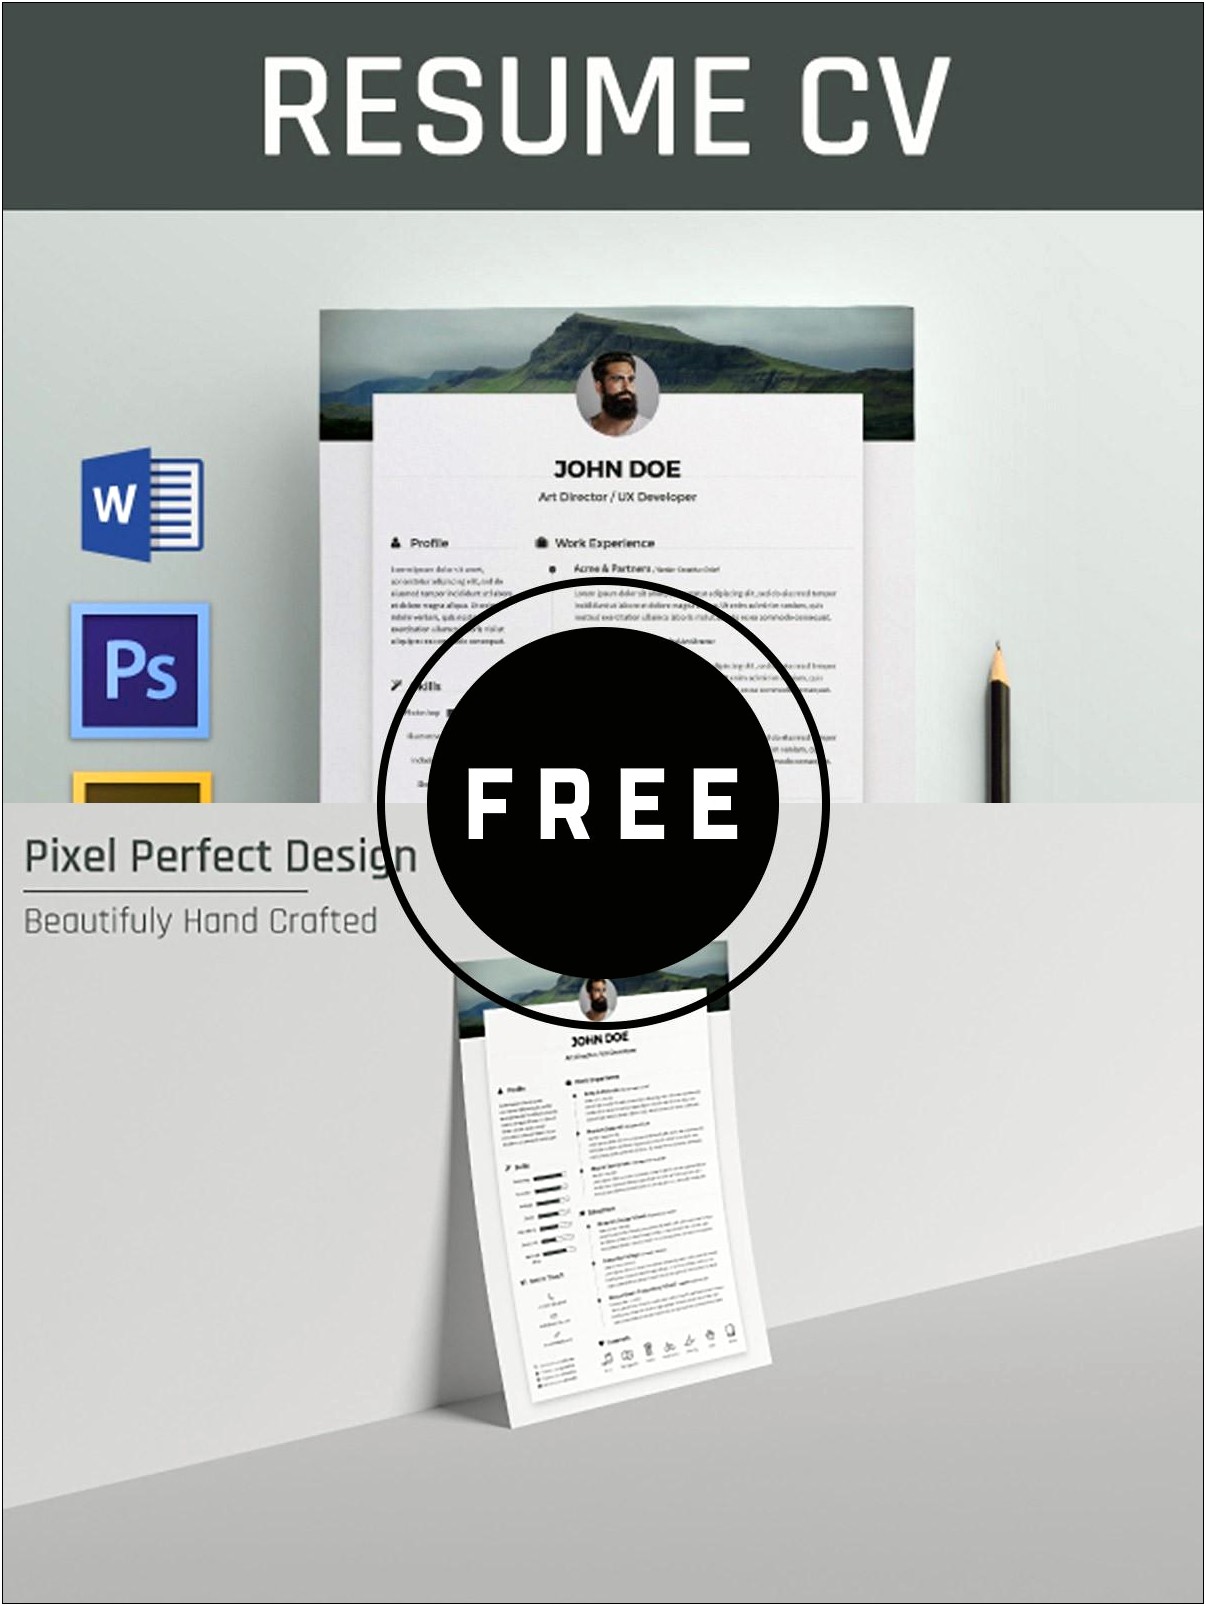 Perfect Free Resume Design Dox